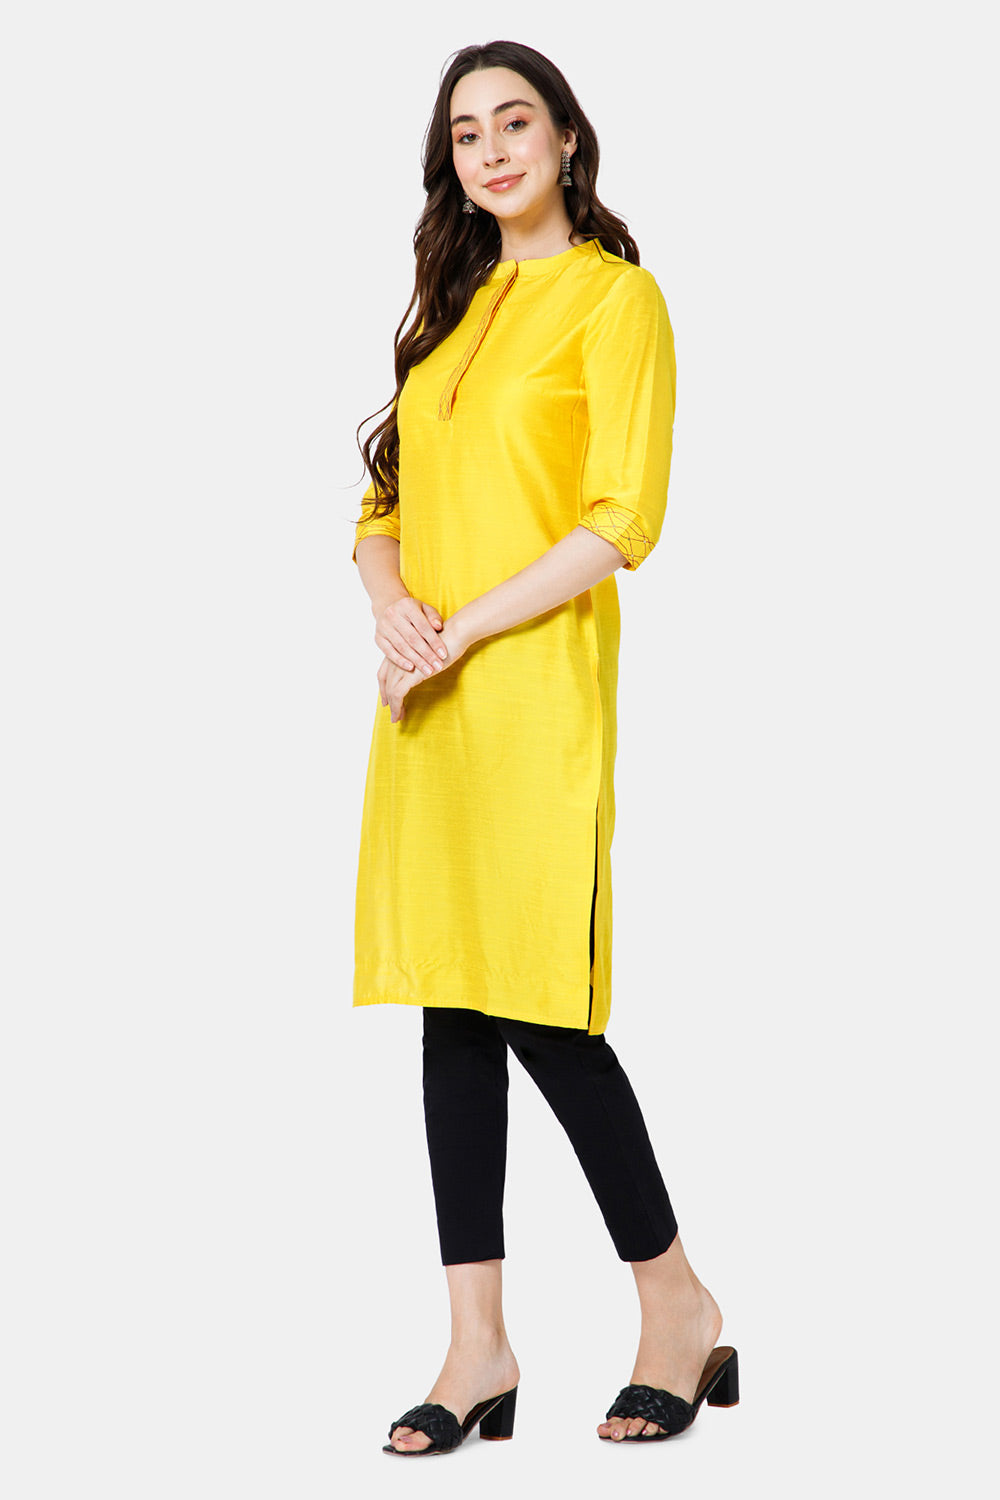 Mythri Women's Ethnic Wear Mandarin collar 3/4 sleeve straight cut Kurti - Yellow - KU43